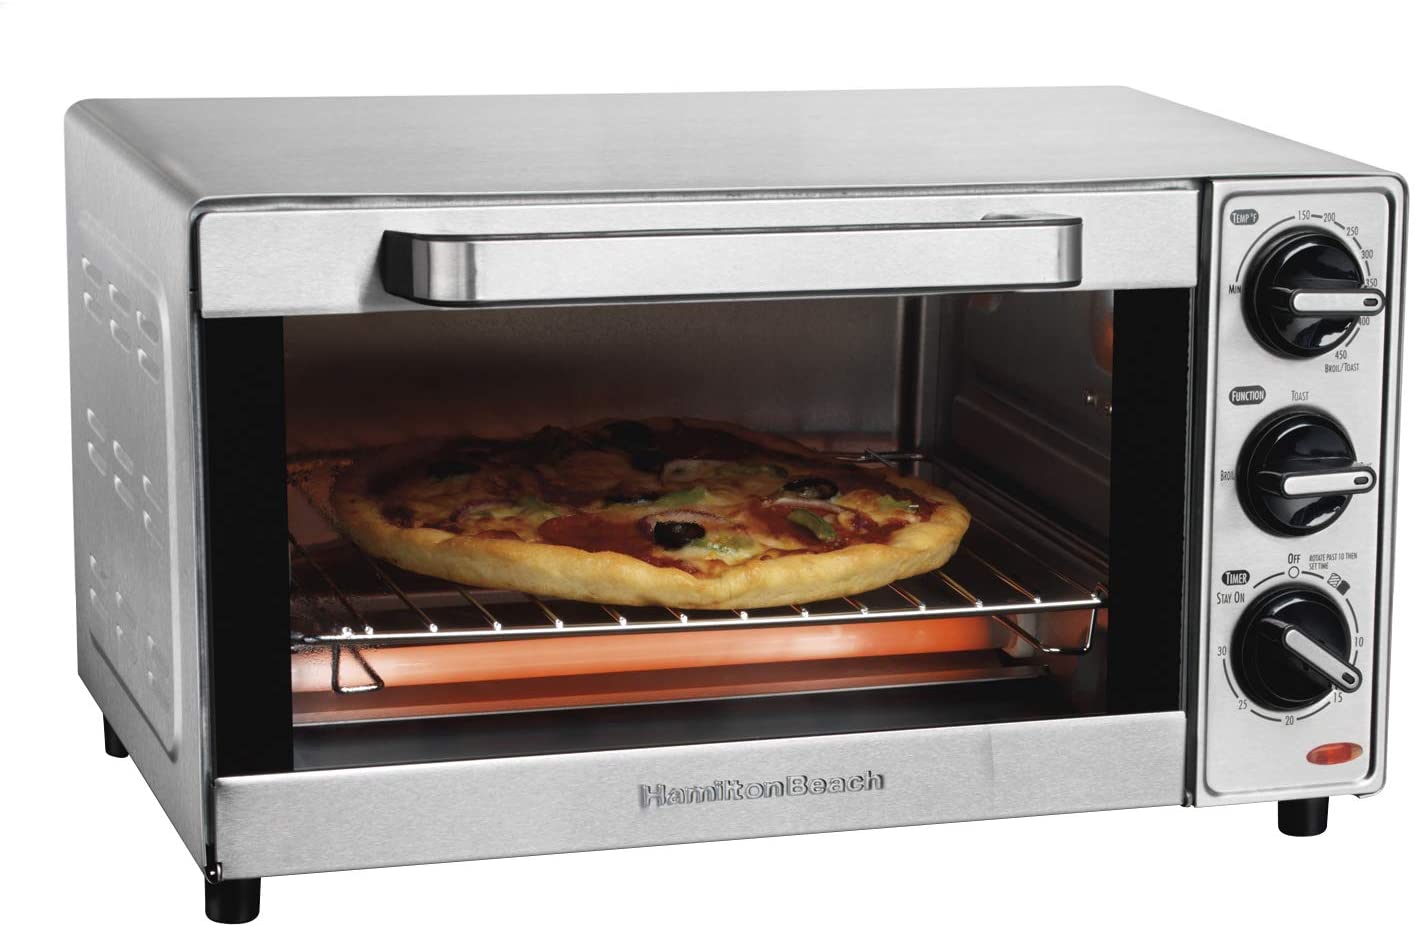 Hamilton Beach Stainless Steel Countertop Toaster Oven & Pizza Maker